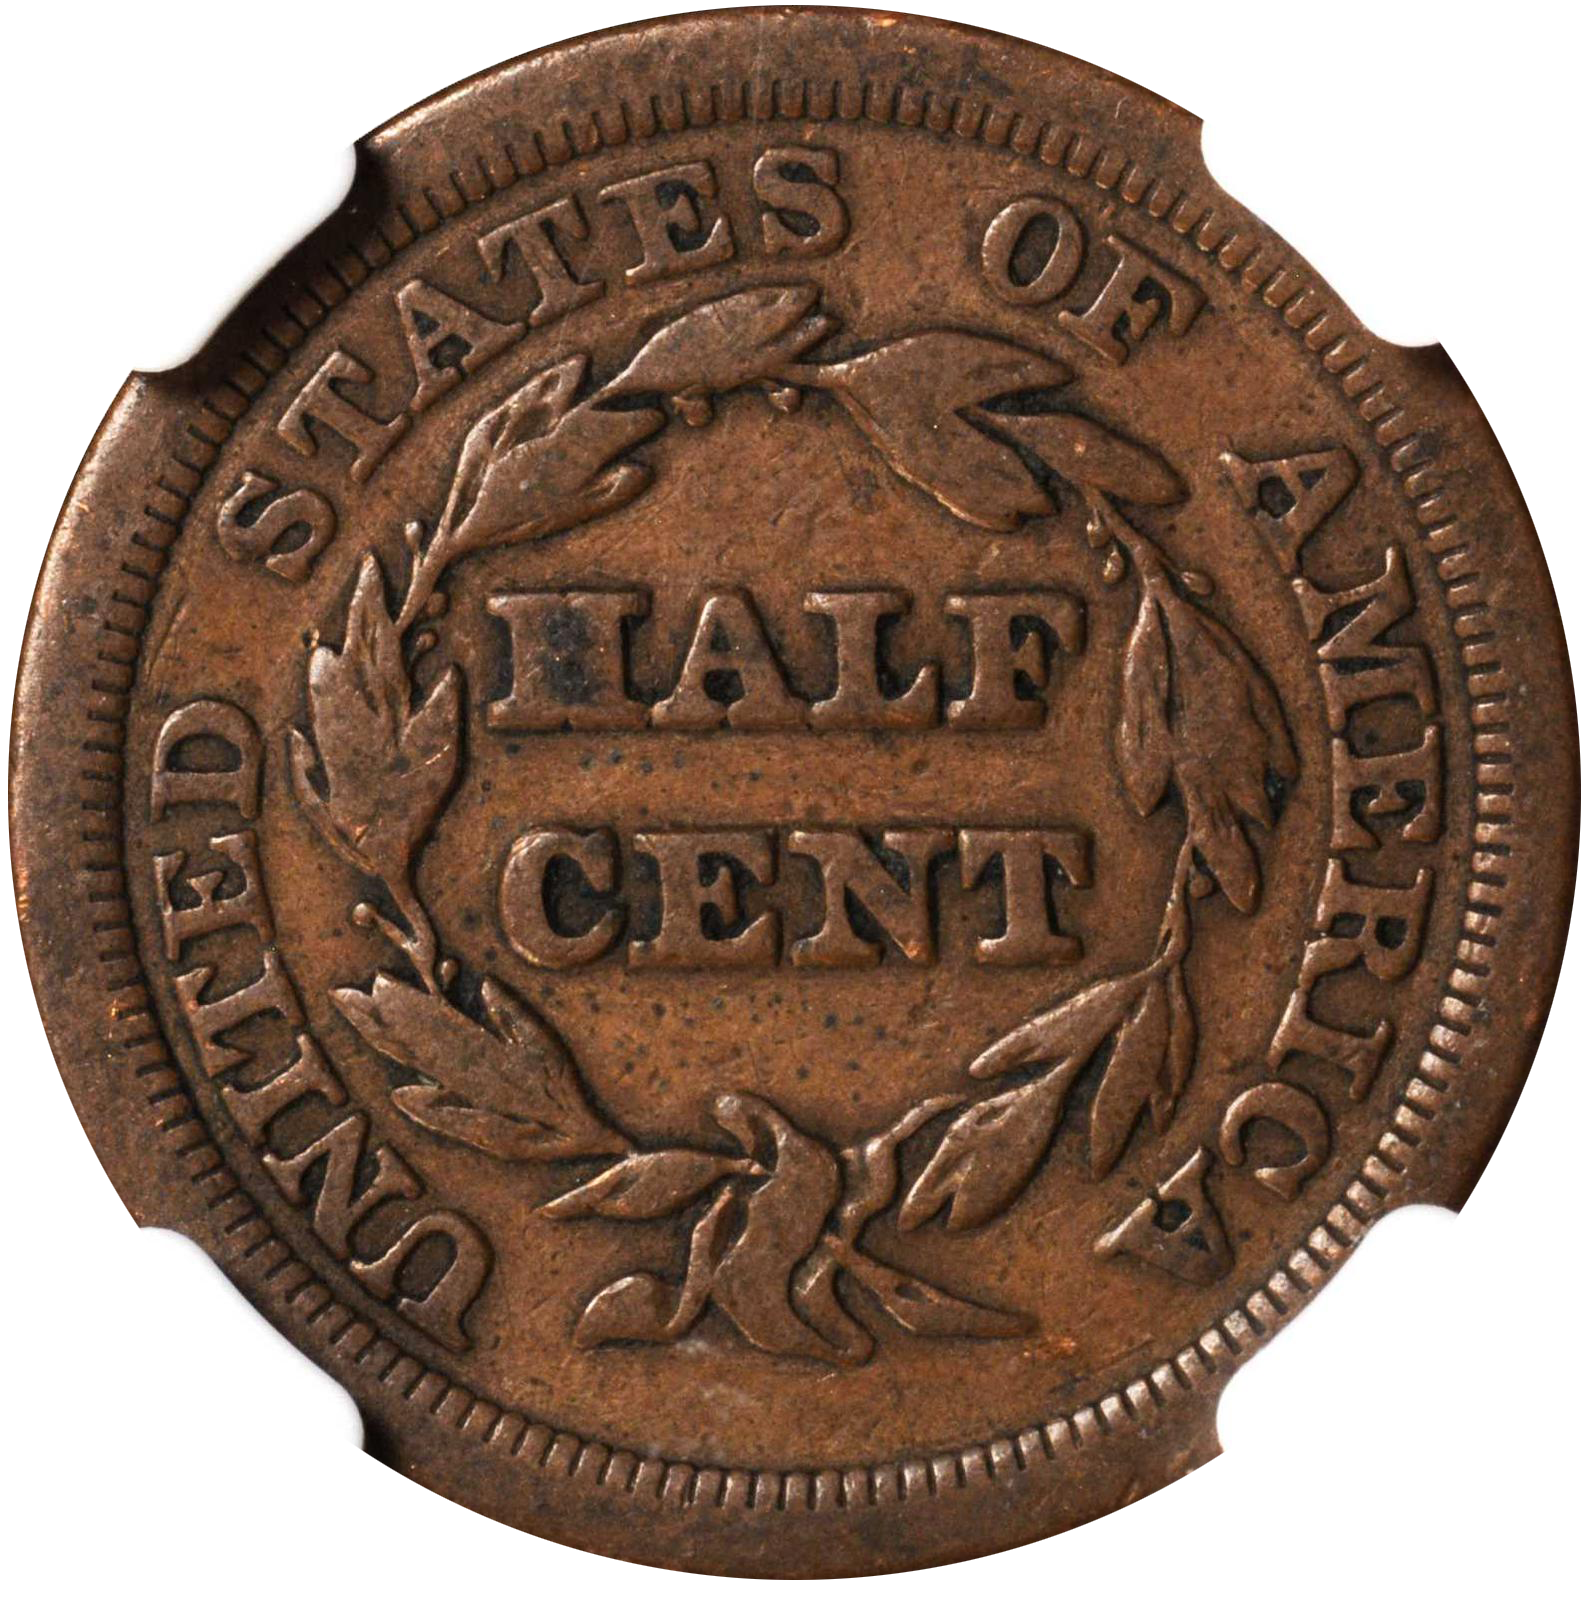 1857 Braided Hair Half Cent